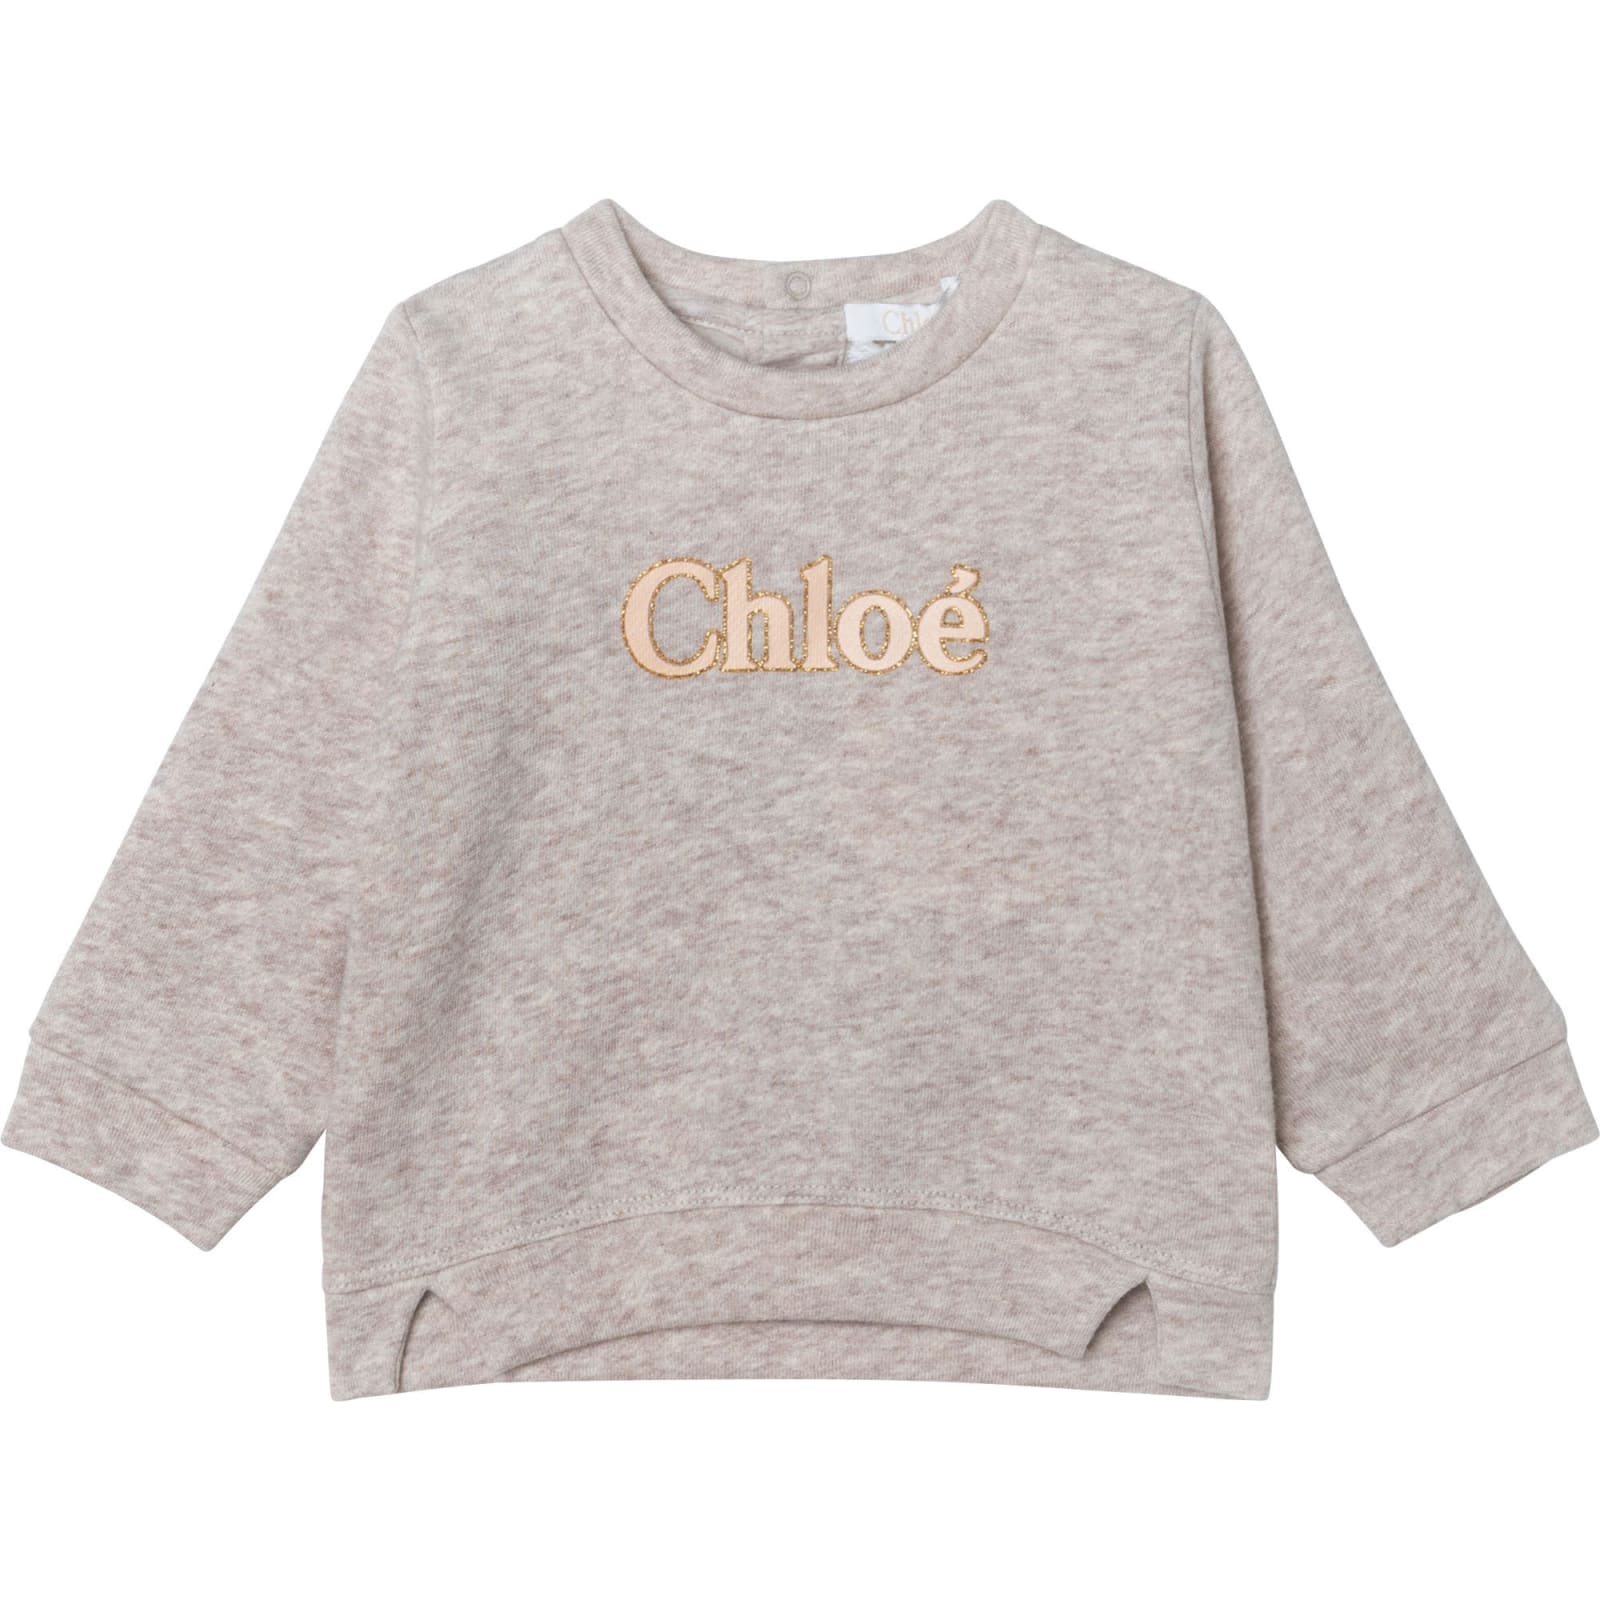 Chloé Sweater With Glitter Logo